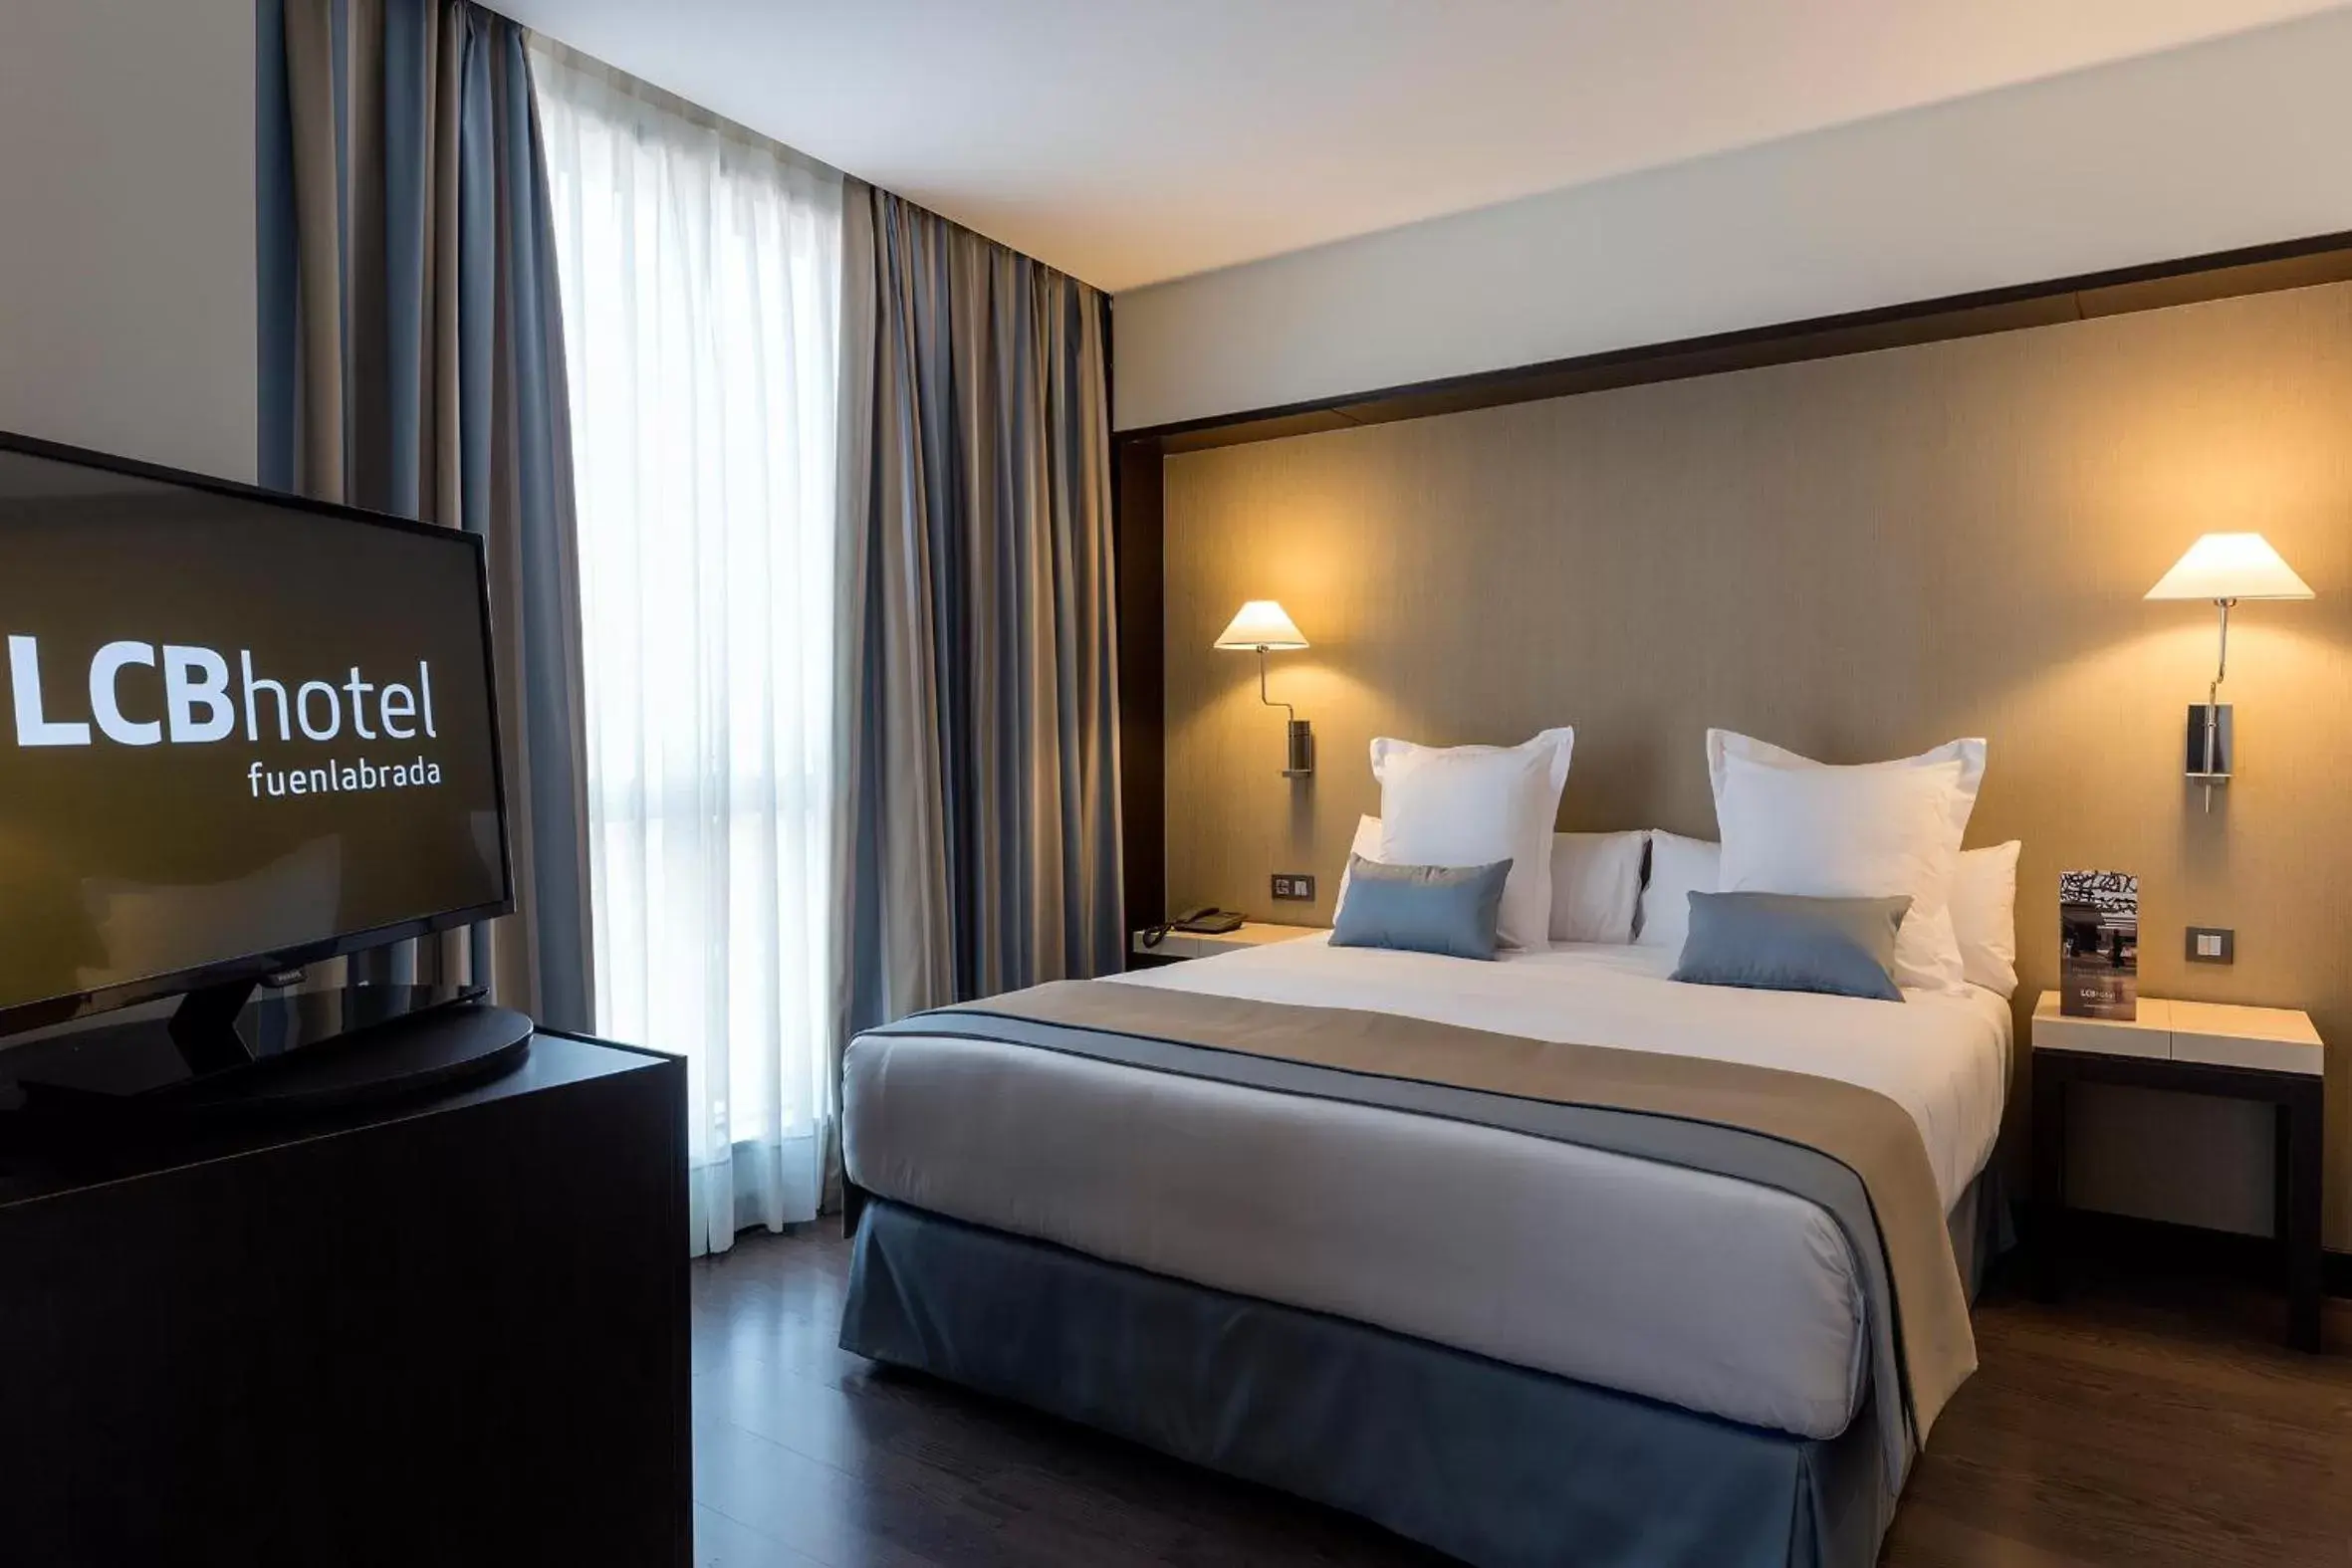 Double Room in LCB Hotel Fuenlabrada